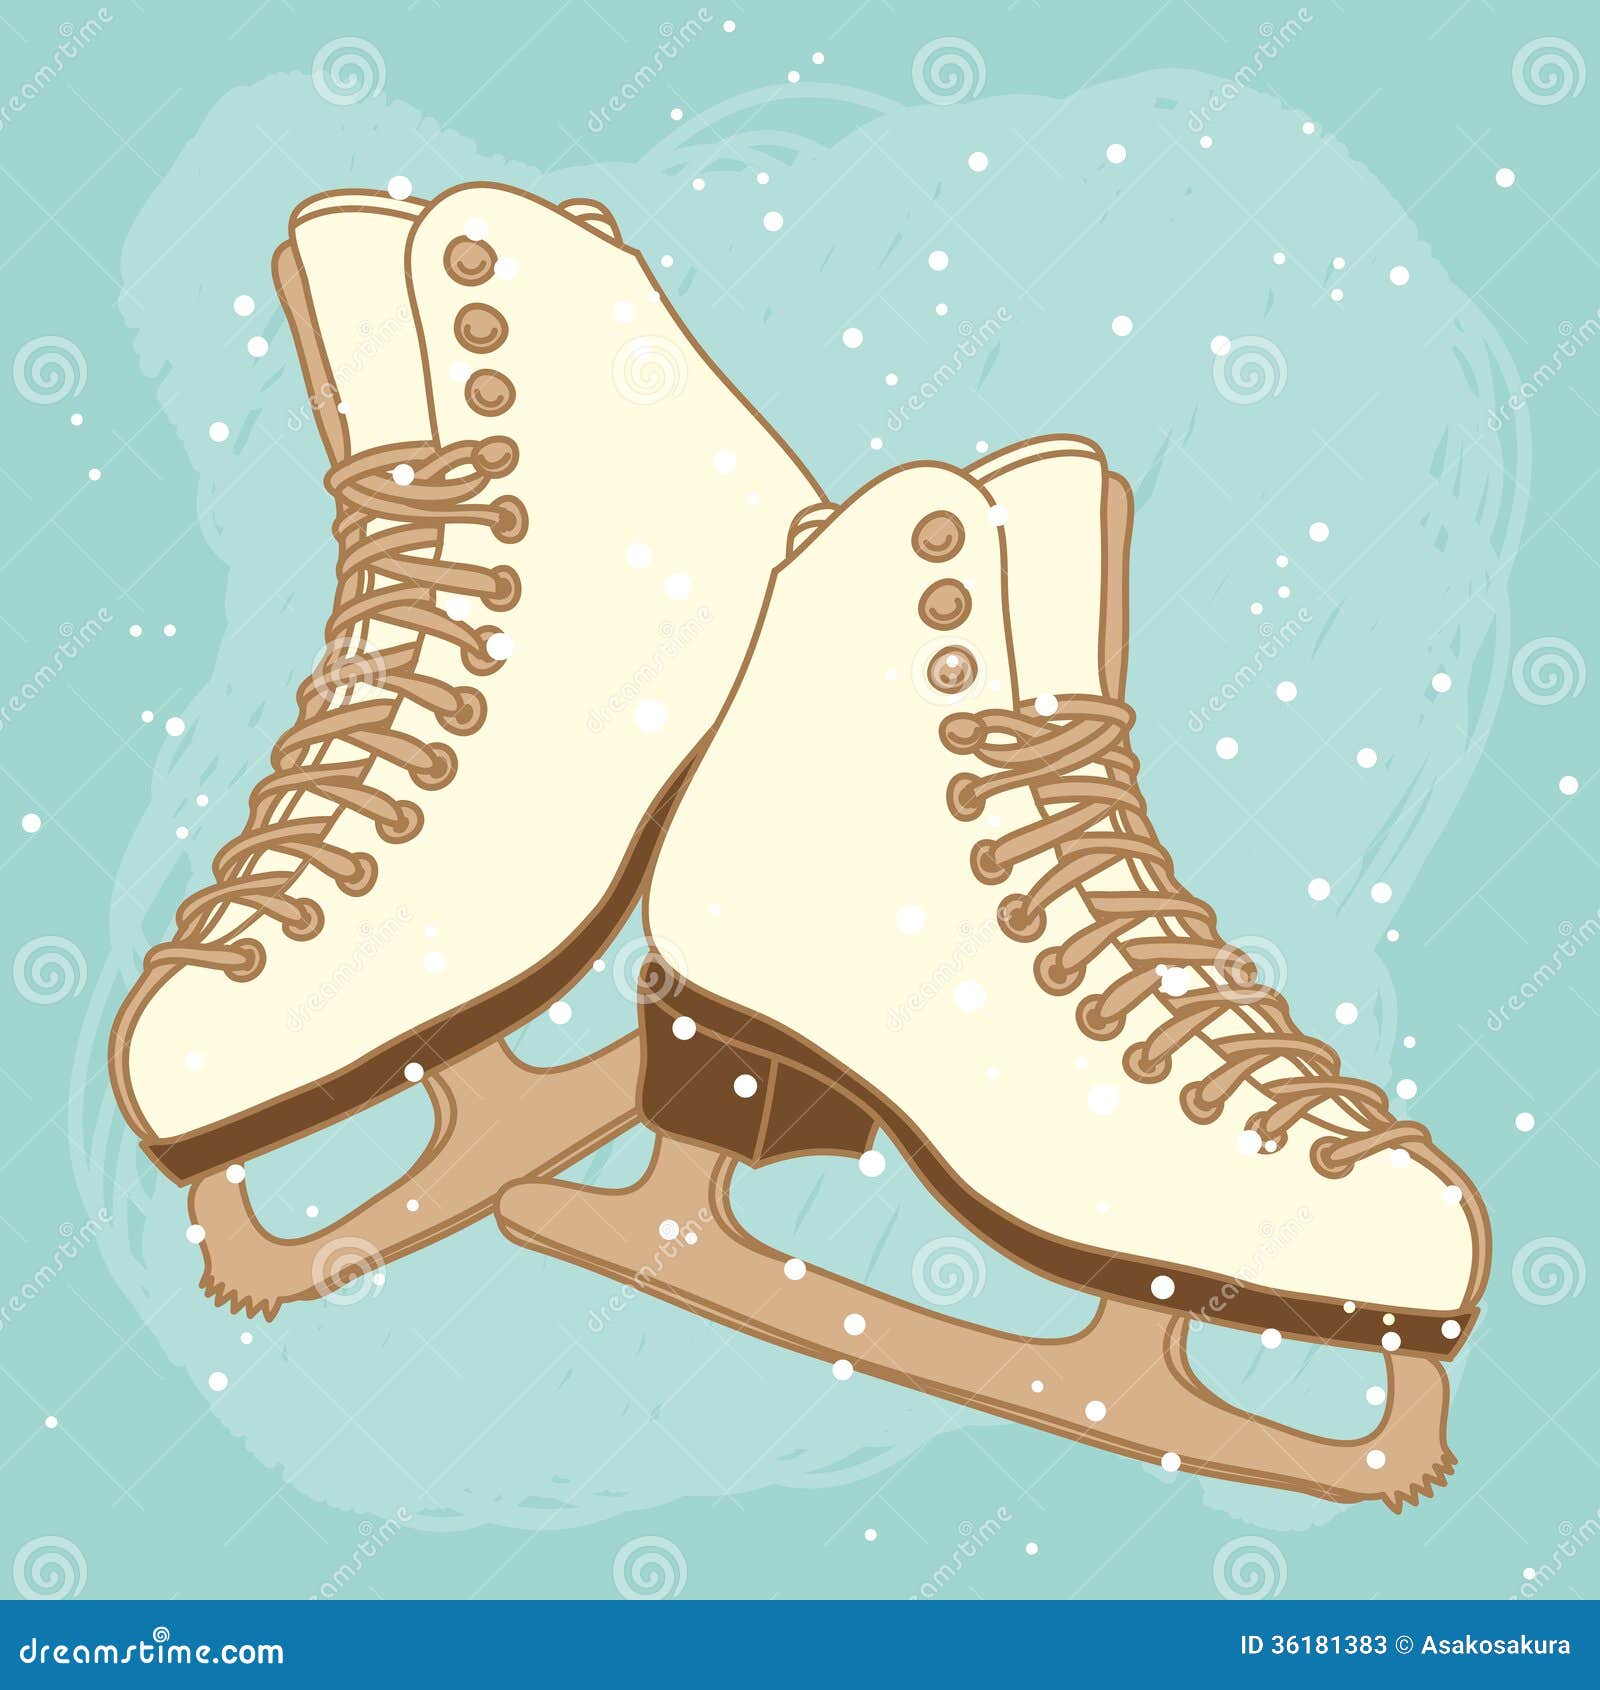 Vector Postcard Design With Ice Skates Stock Photos - Image: 36181383